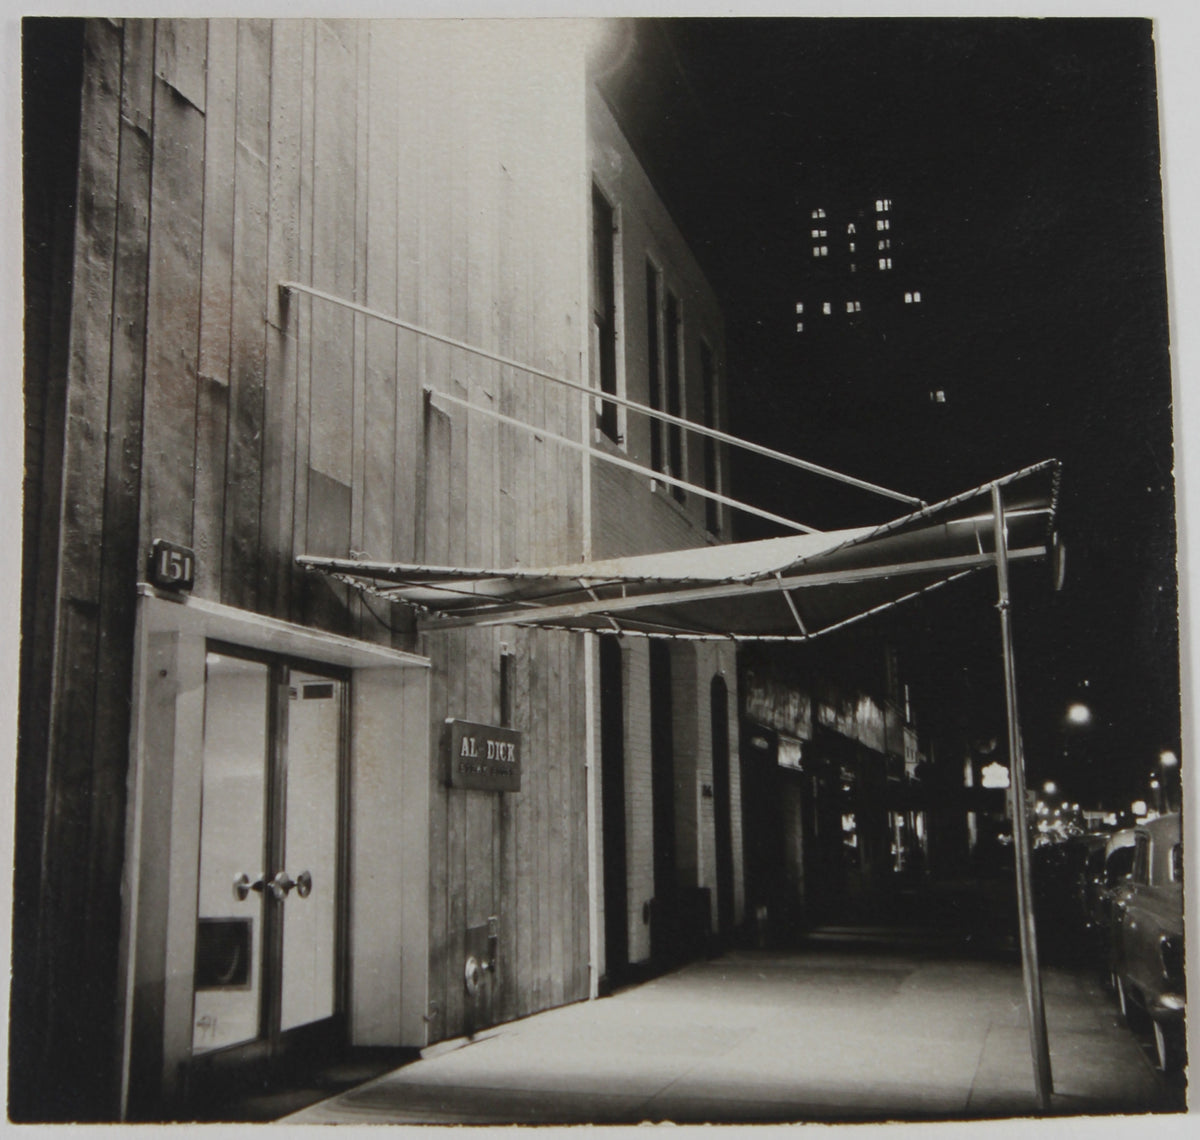 City Street at Night &lt;br&gt;1960s Photograph &lt;br&gt;&lt;br&gt;#38099